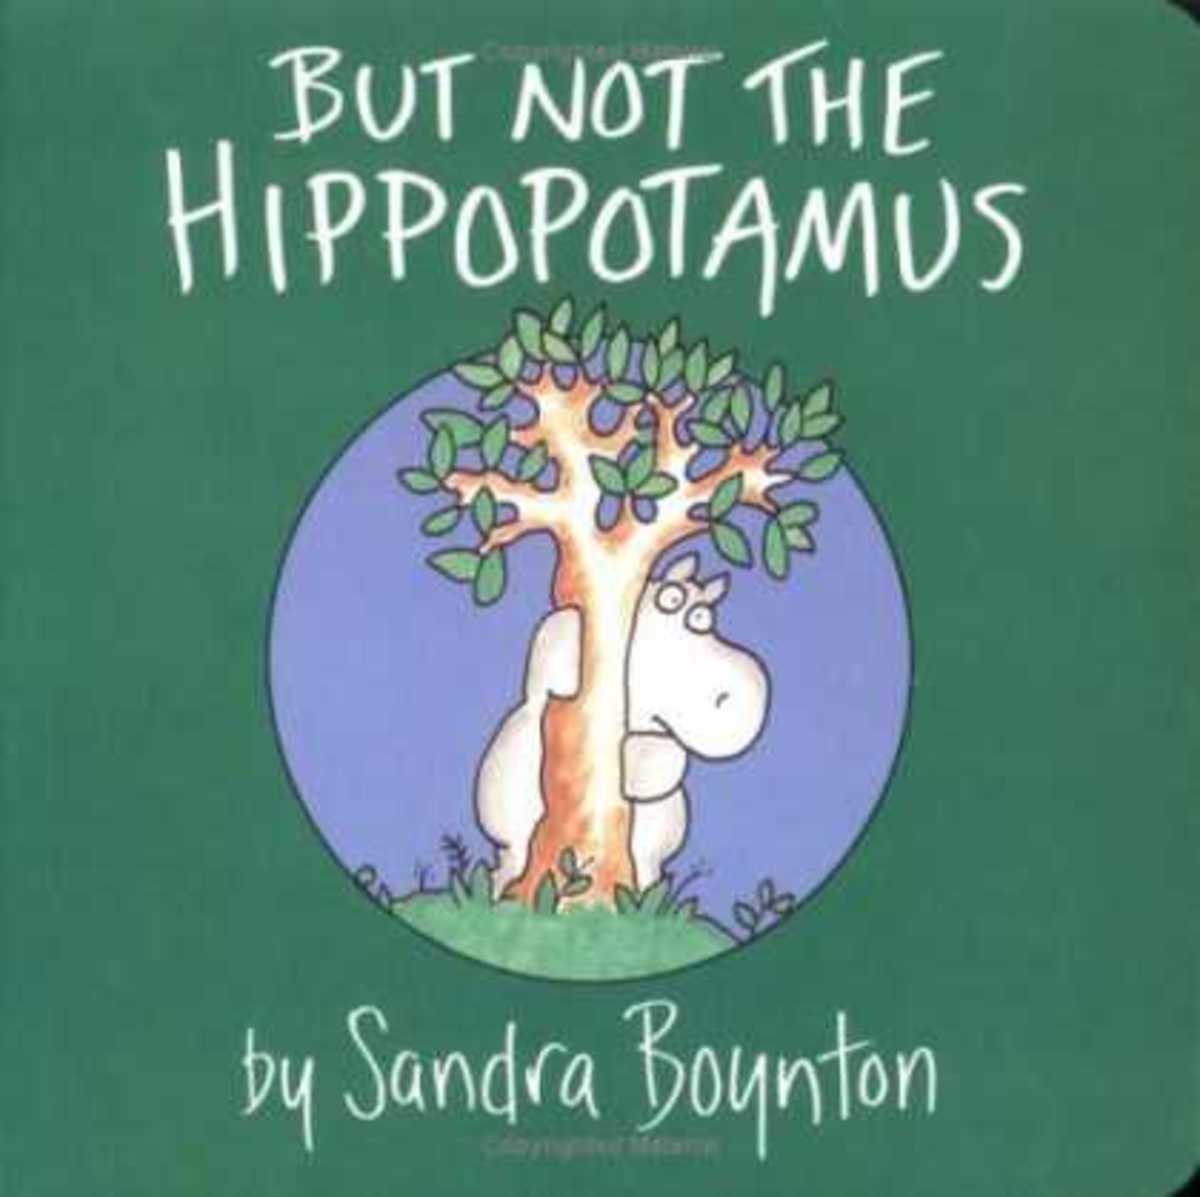 But Not the Hippopotomus by Sandra Boynton